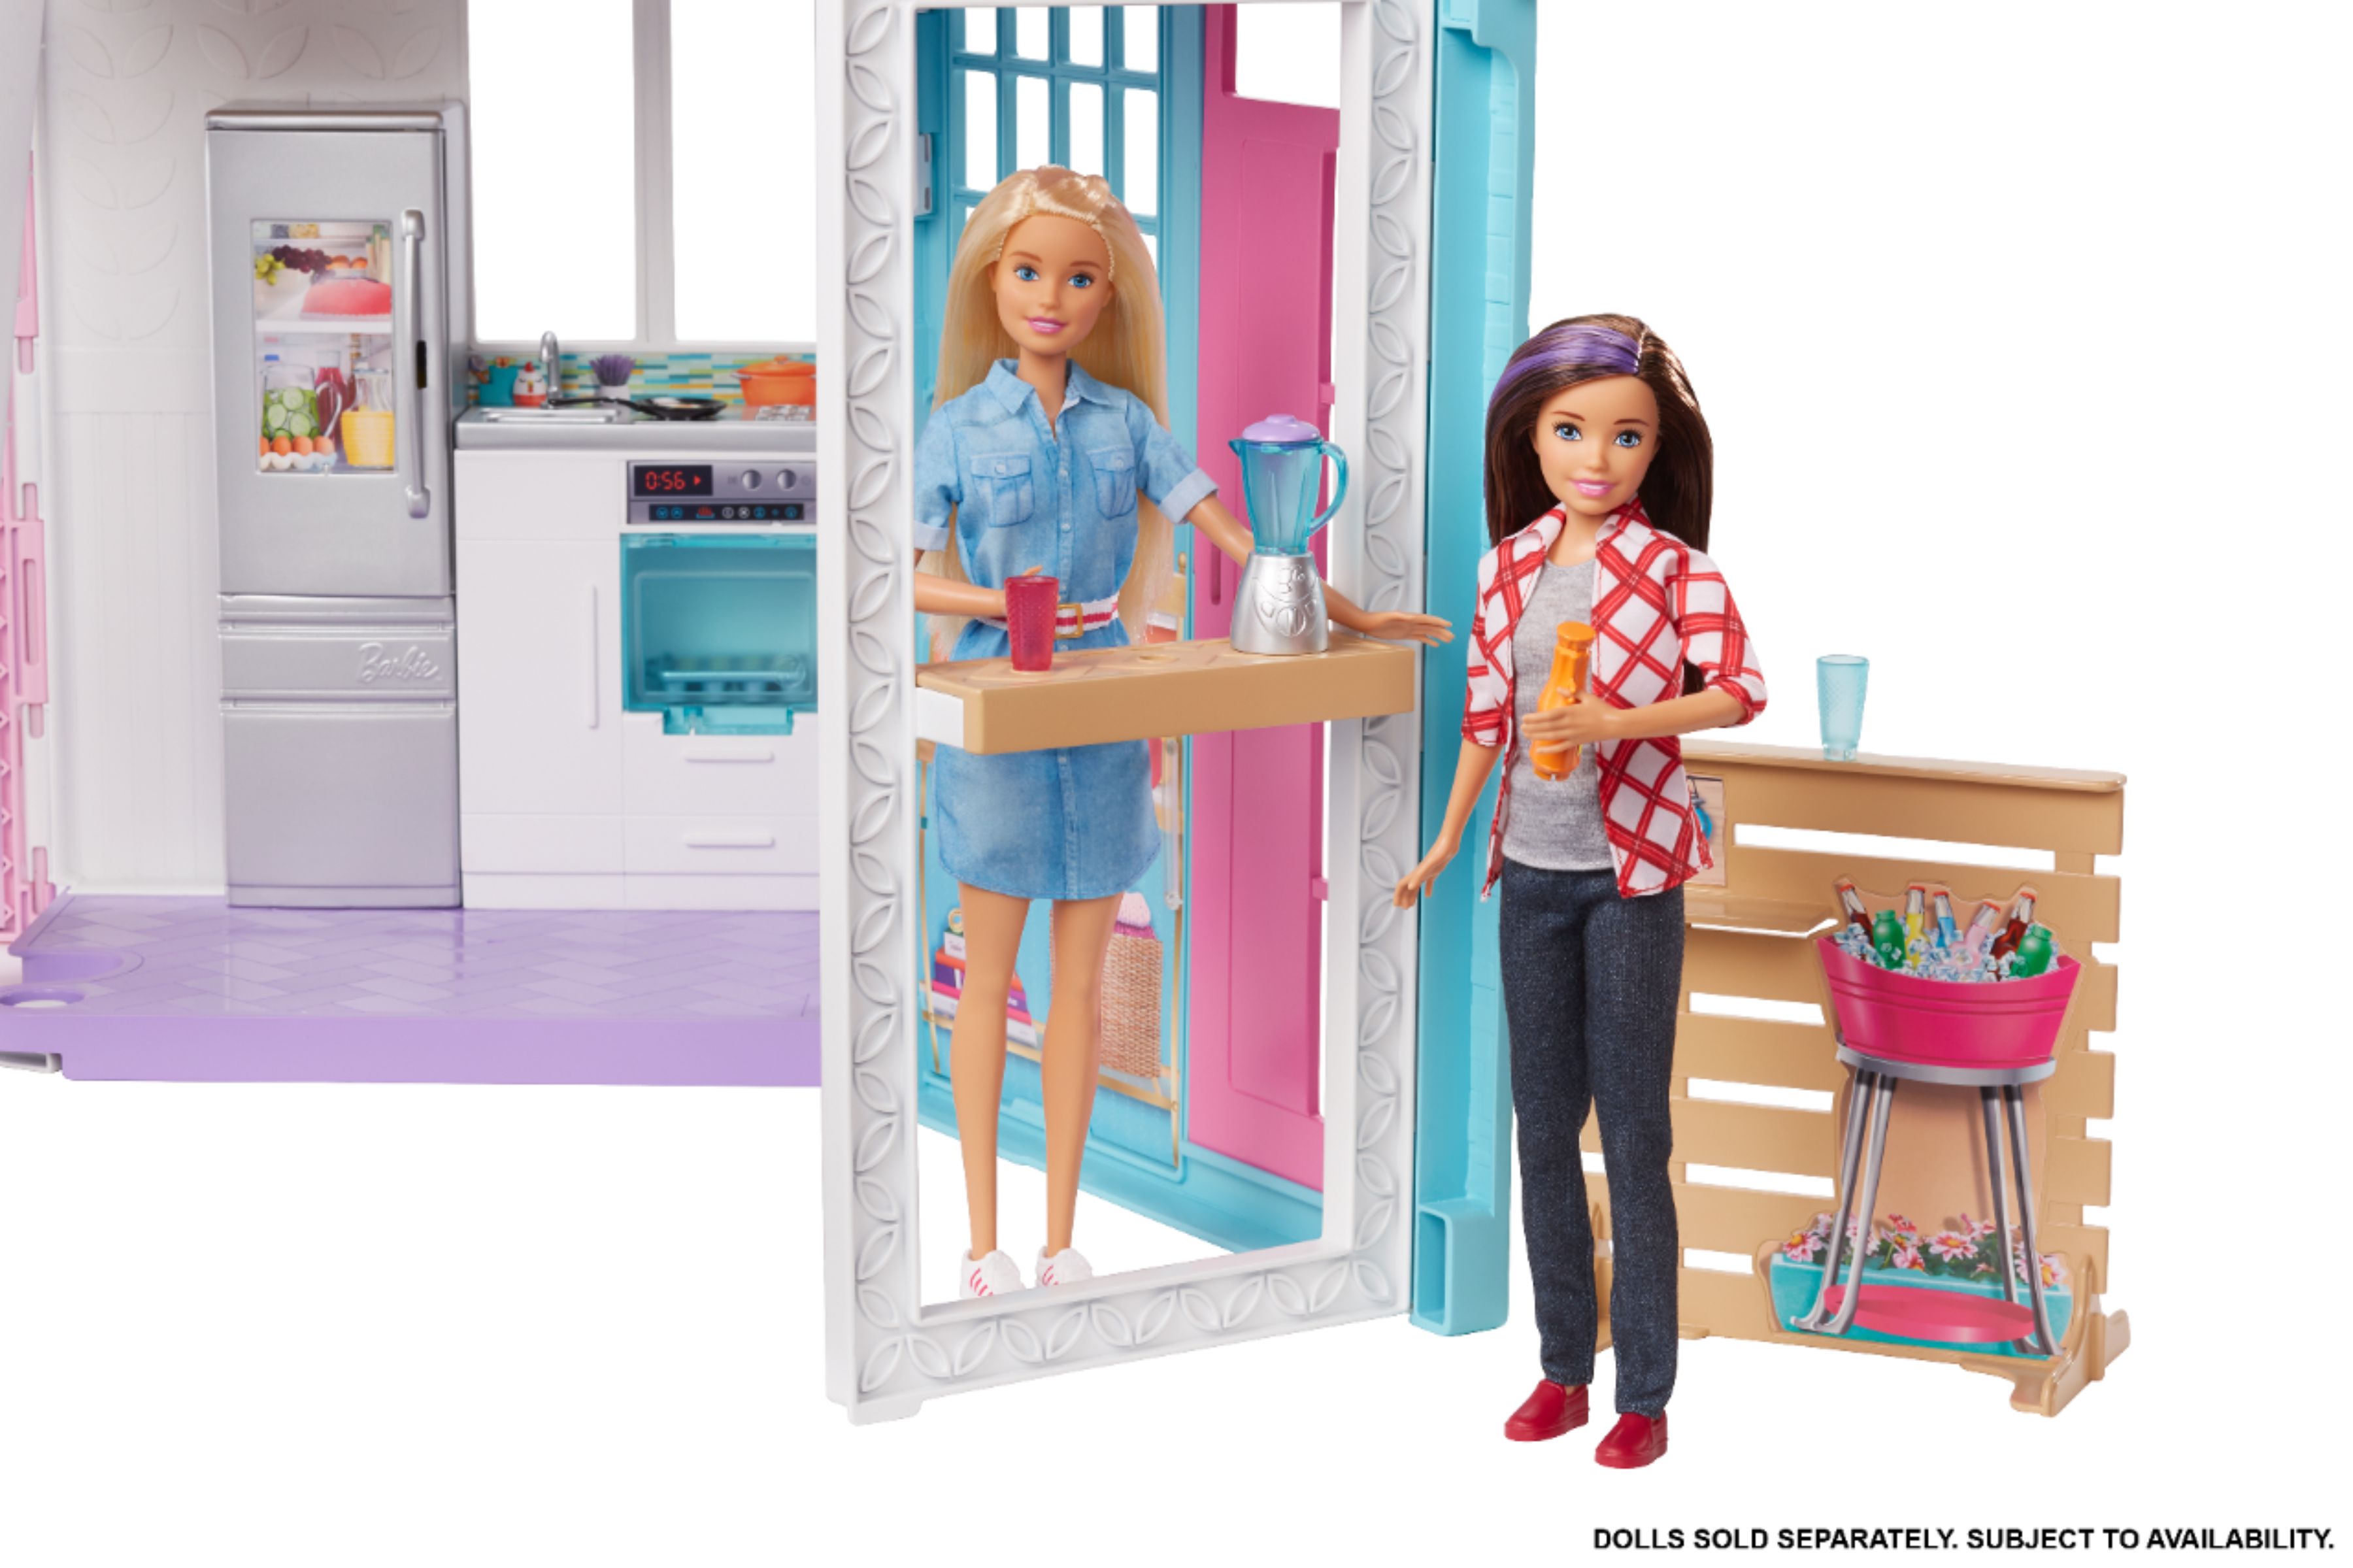 Barbie FXG57 Malibu House Playset for sale online 